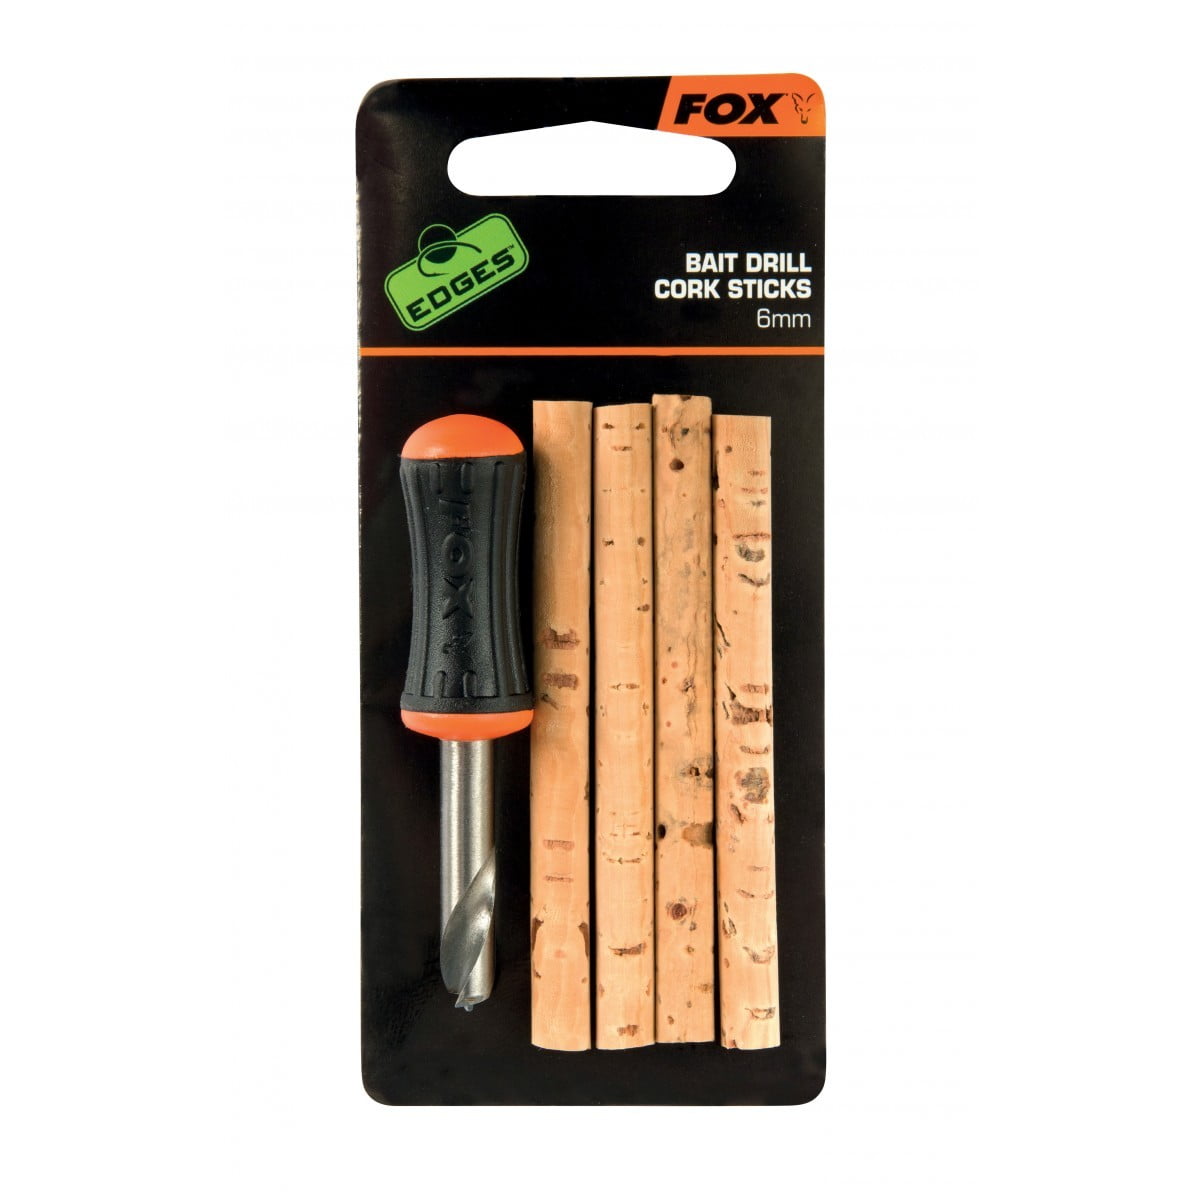 Fox Bait Drill and 6mm Cork Sticks x5